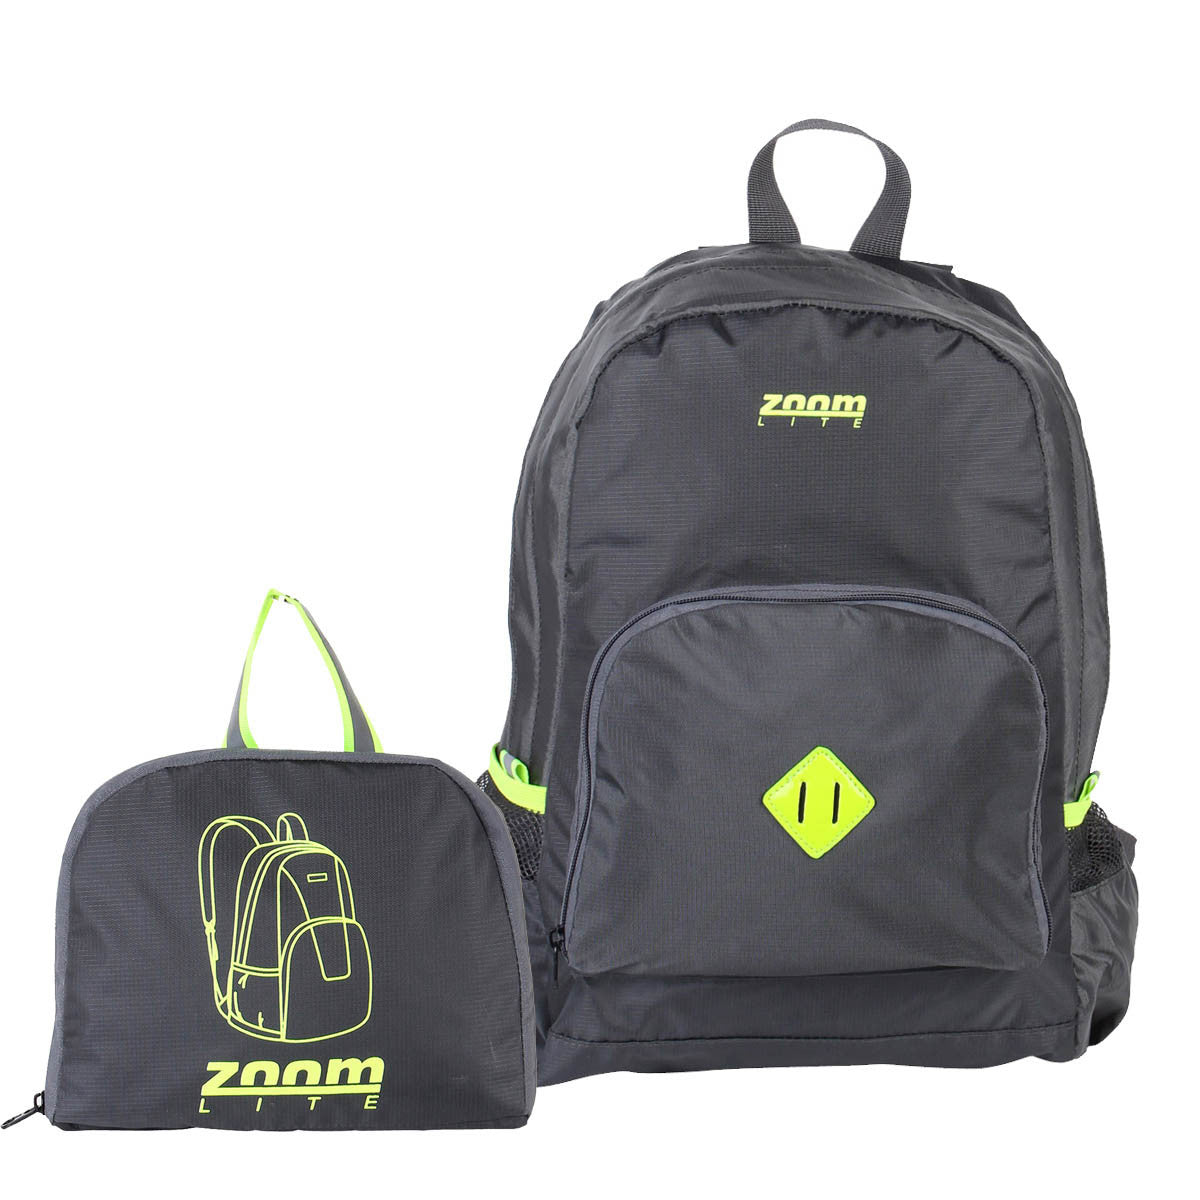 zoomlite Zoomlite Magic Lightweight Compact Packable Backpack 12L - Grey